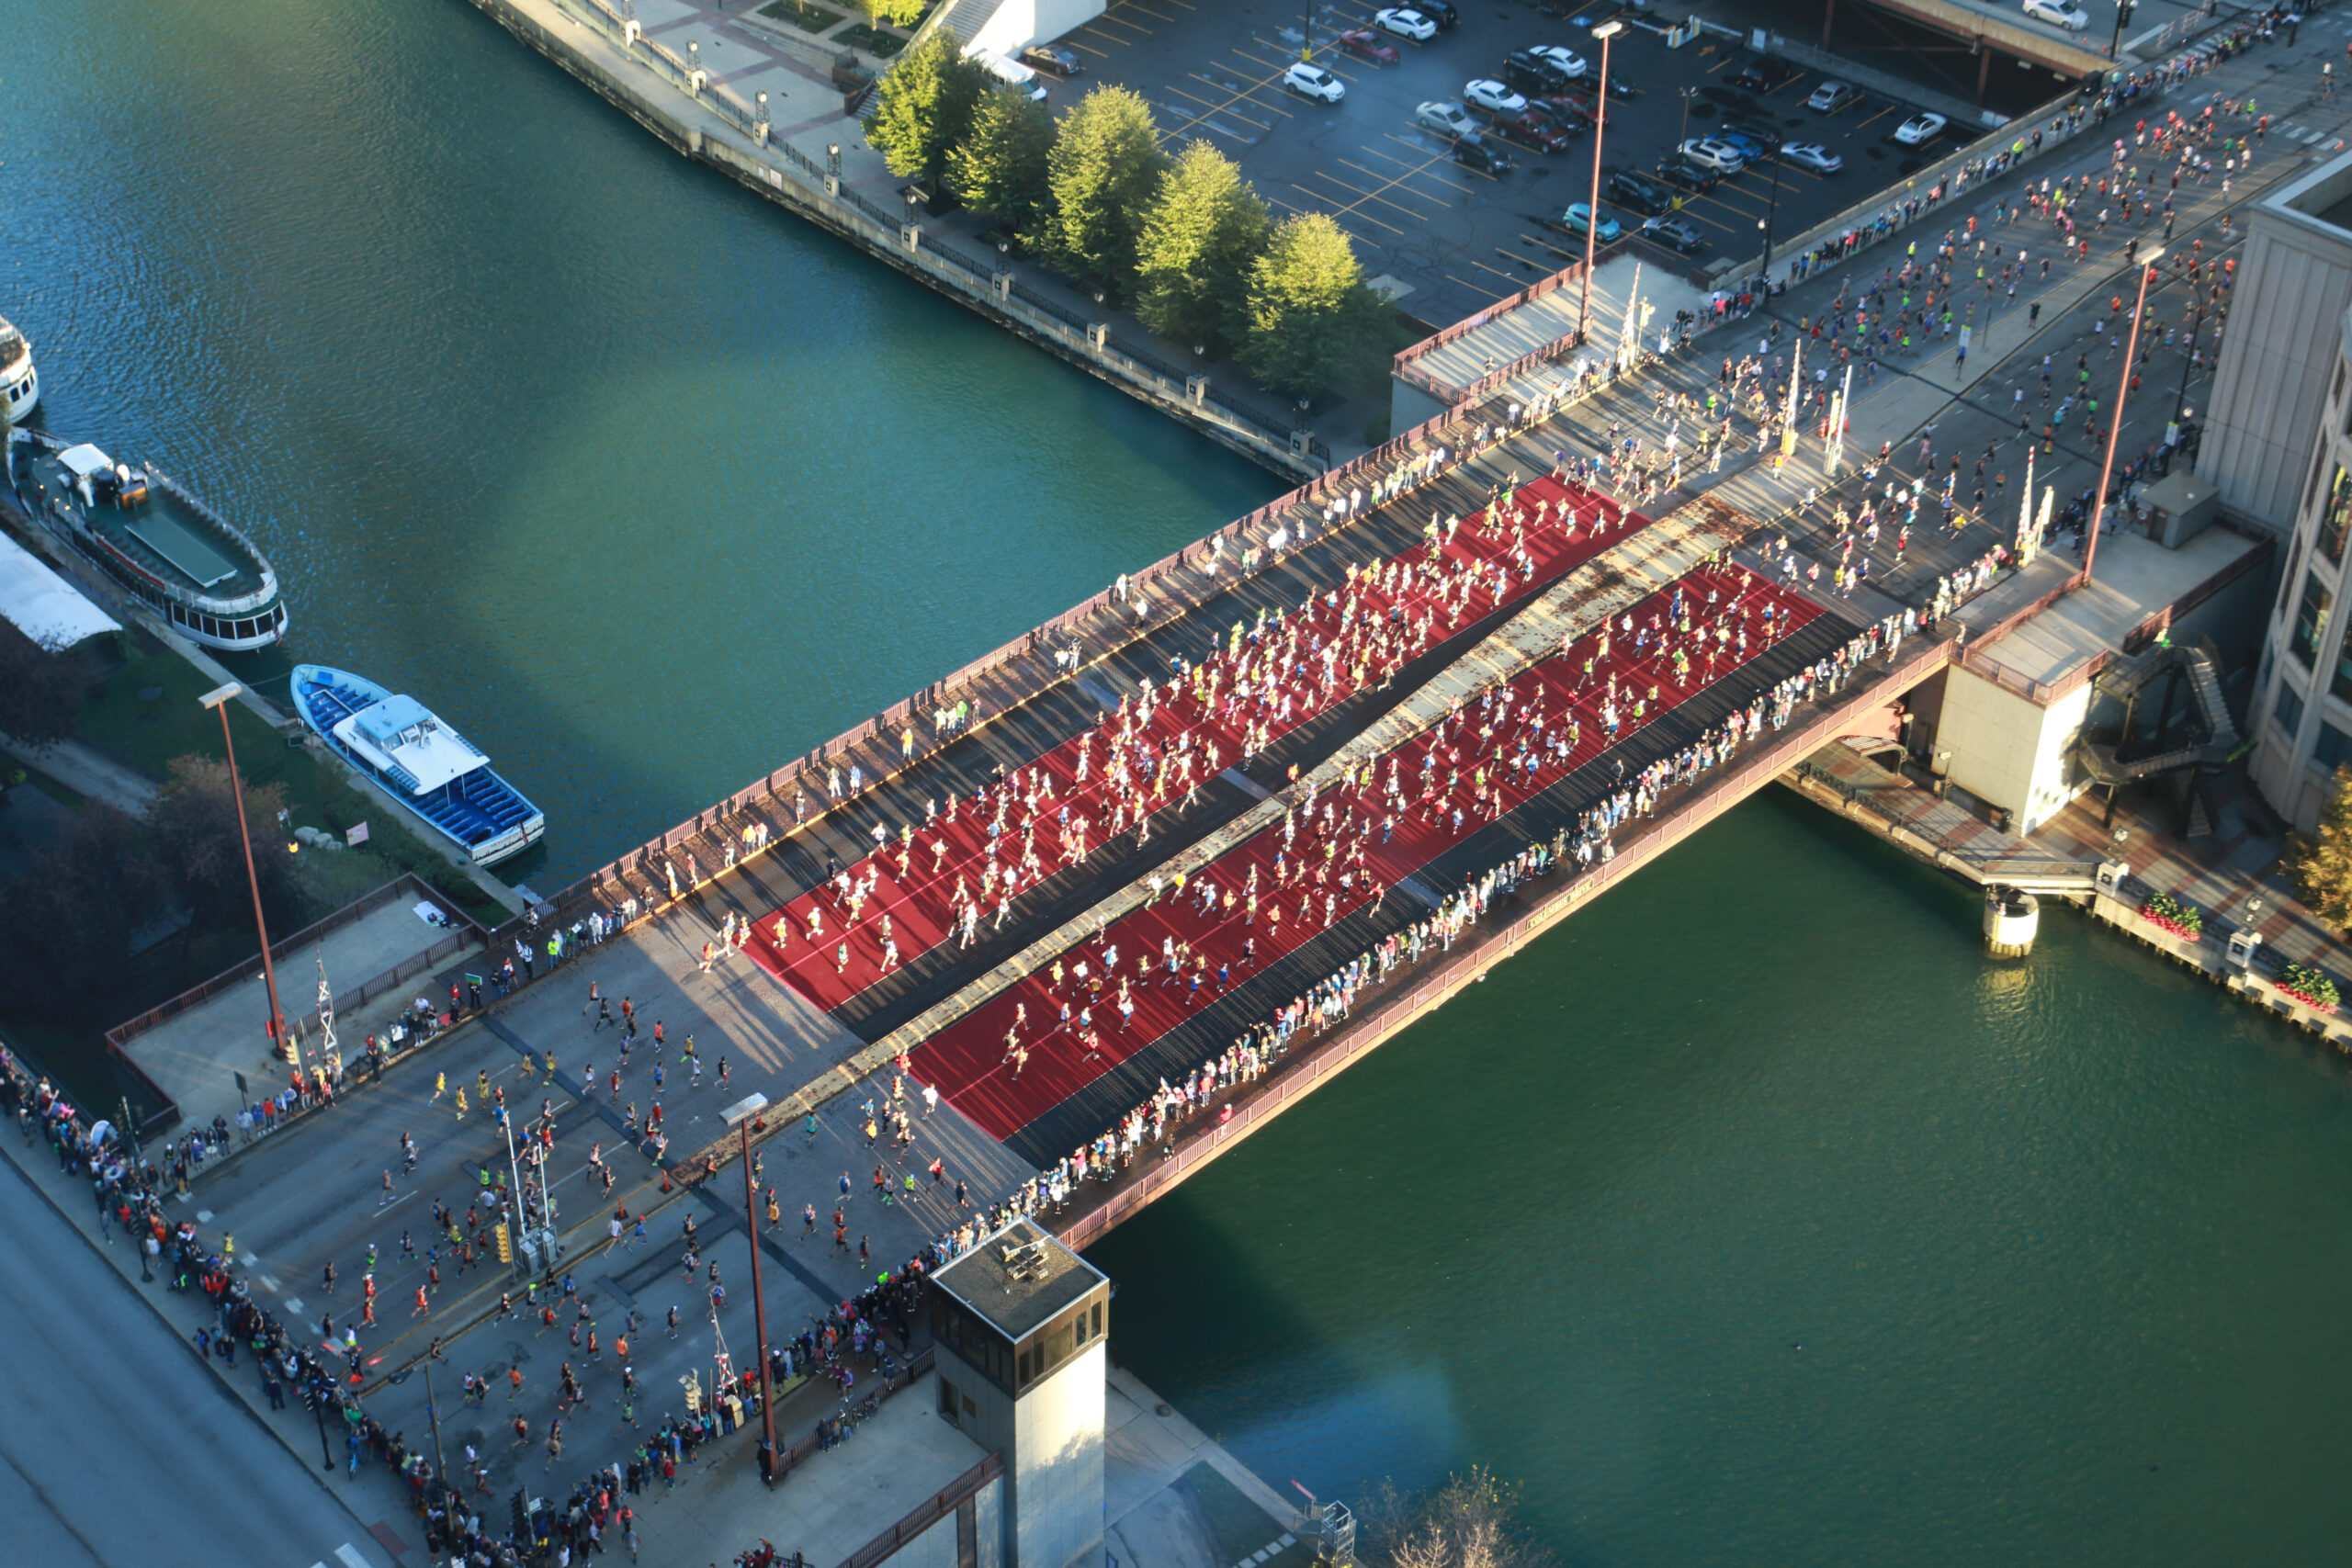 Chicago Marathon event on the bridge